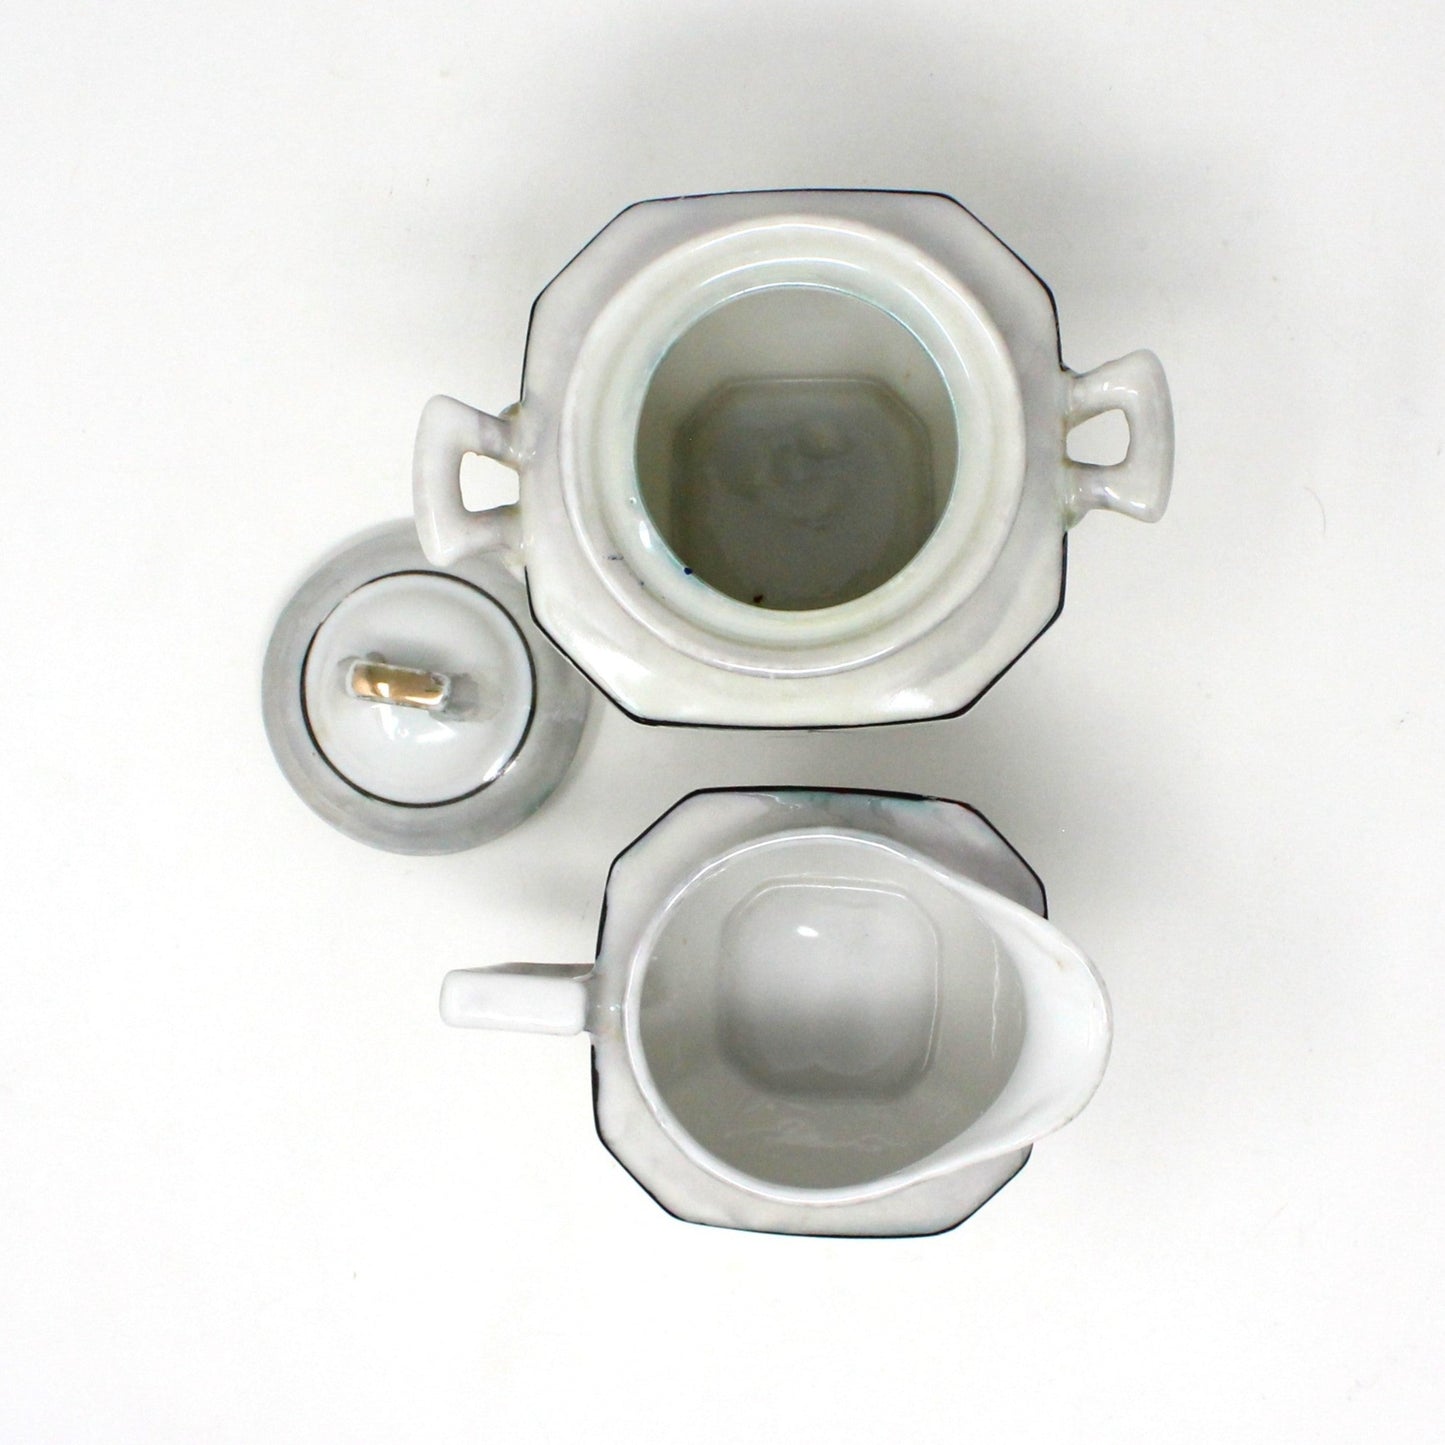 Tea Set, Japan Lusterware Floral, Teapot, Sugar, Creamer, Cups/Saucers & Plates, 13 Pcs, Vintage